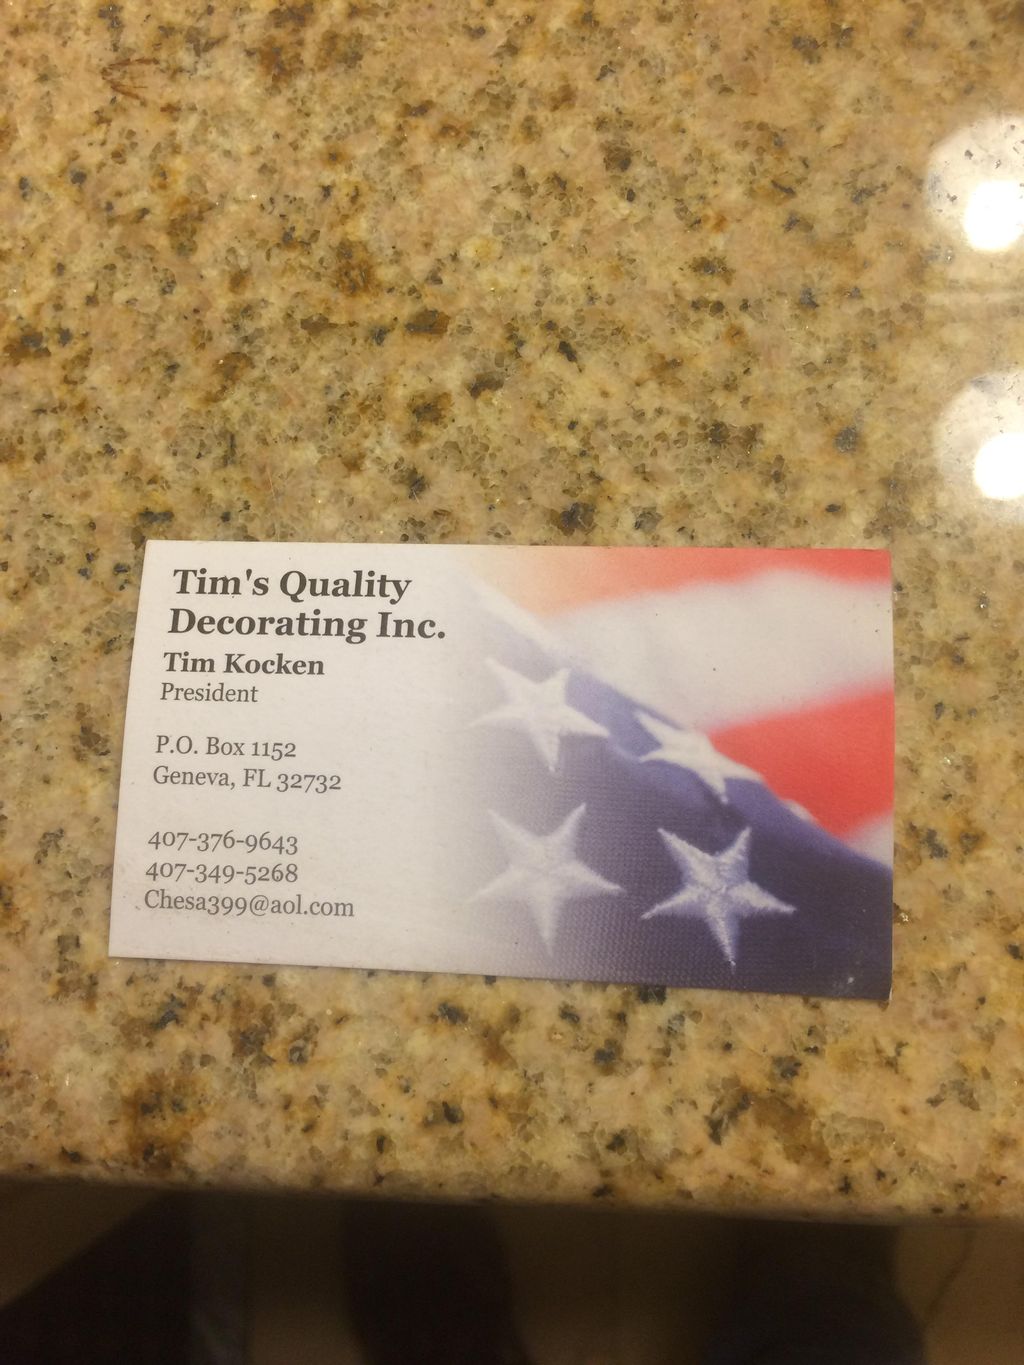 Tim's Quality Decorating Inc